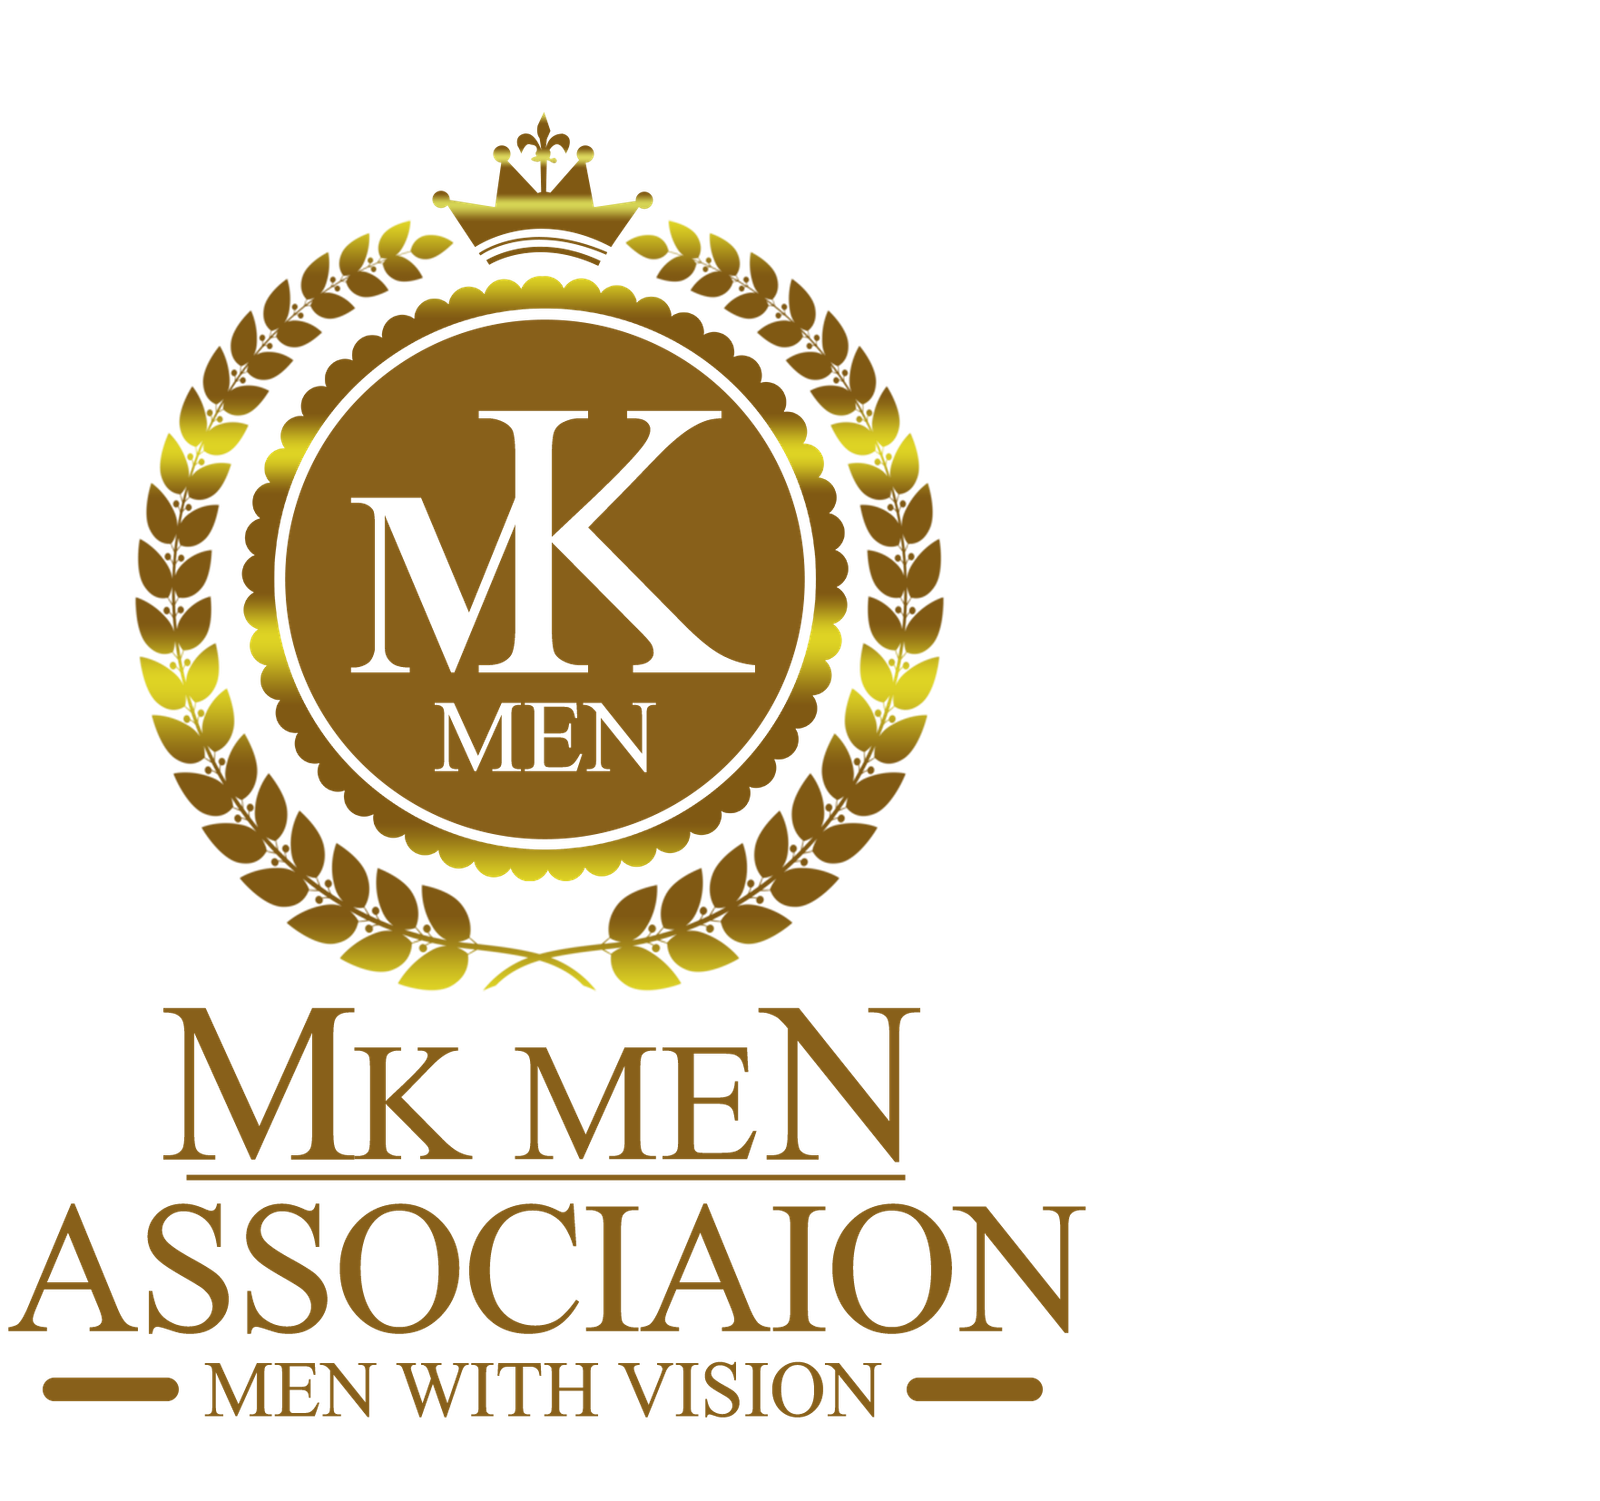 MK Men Association